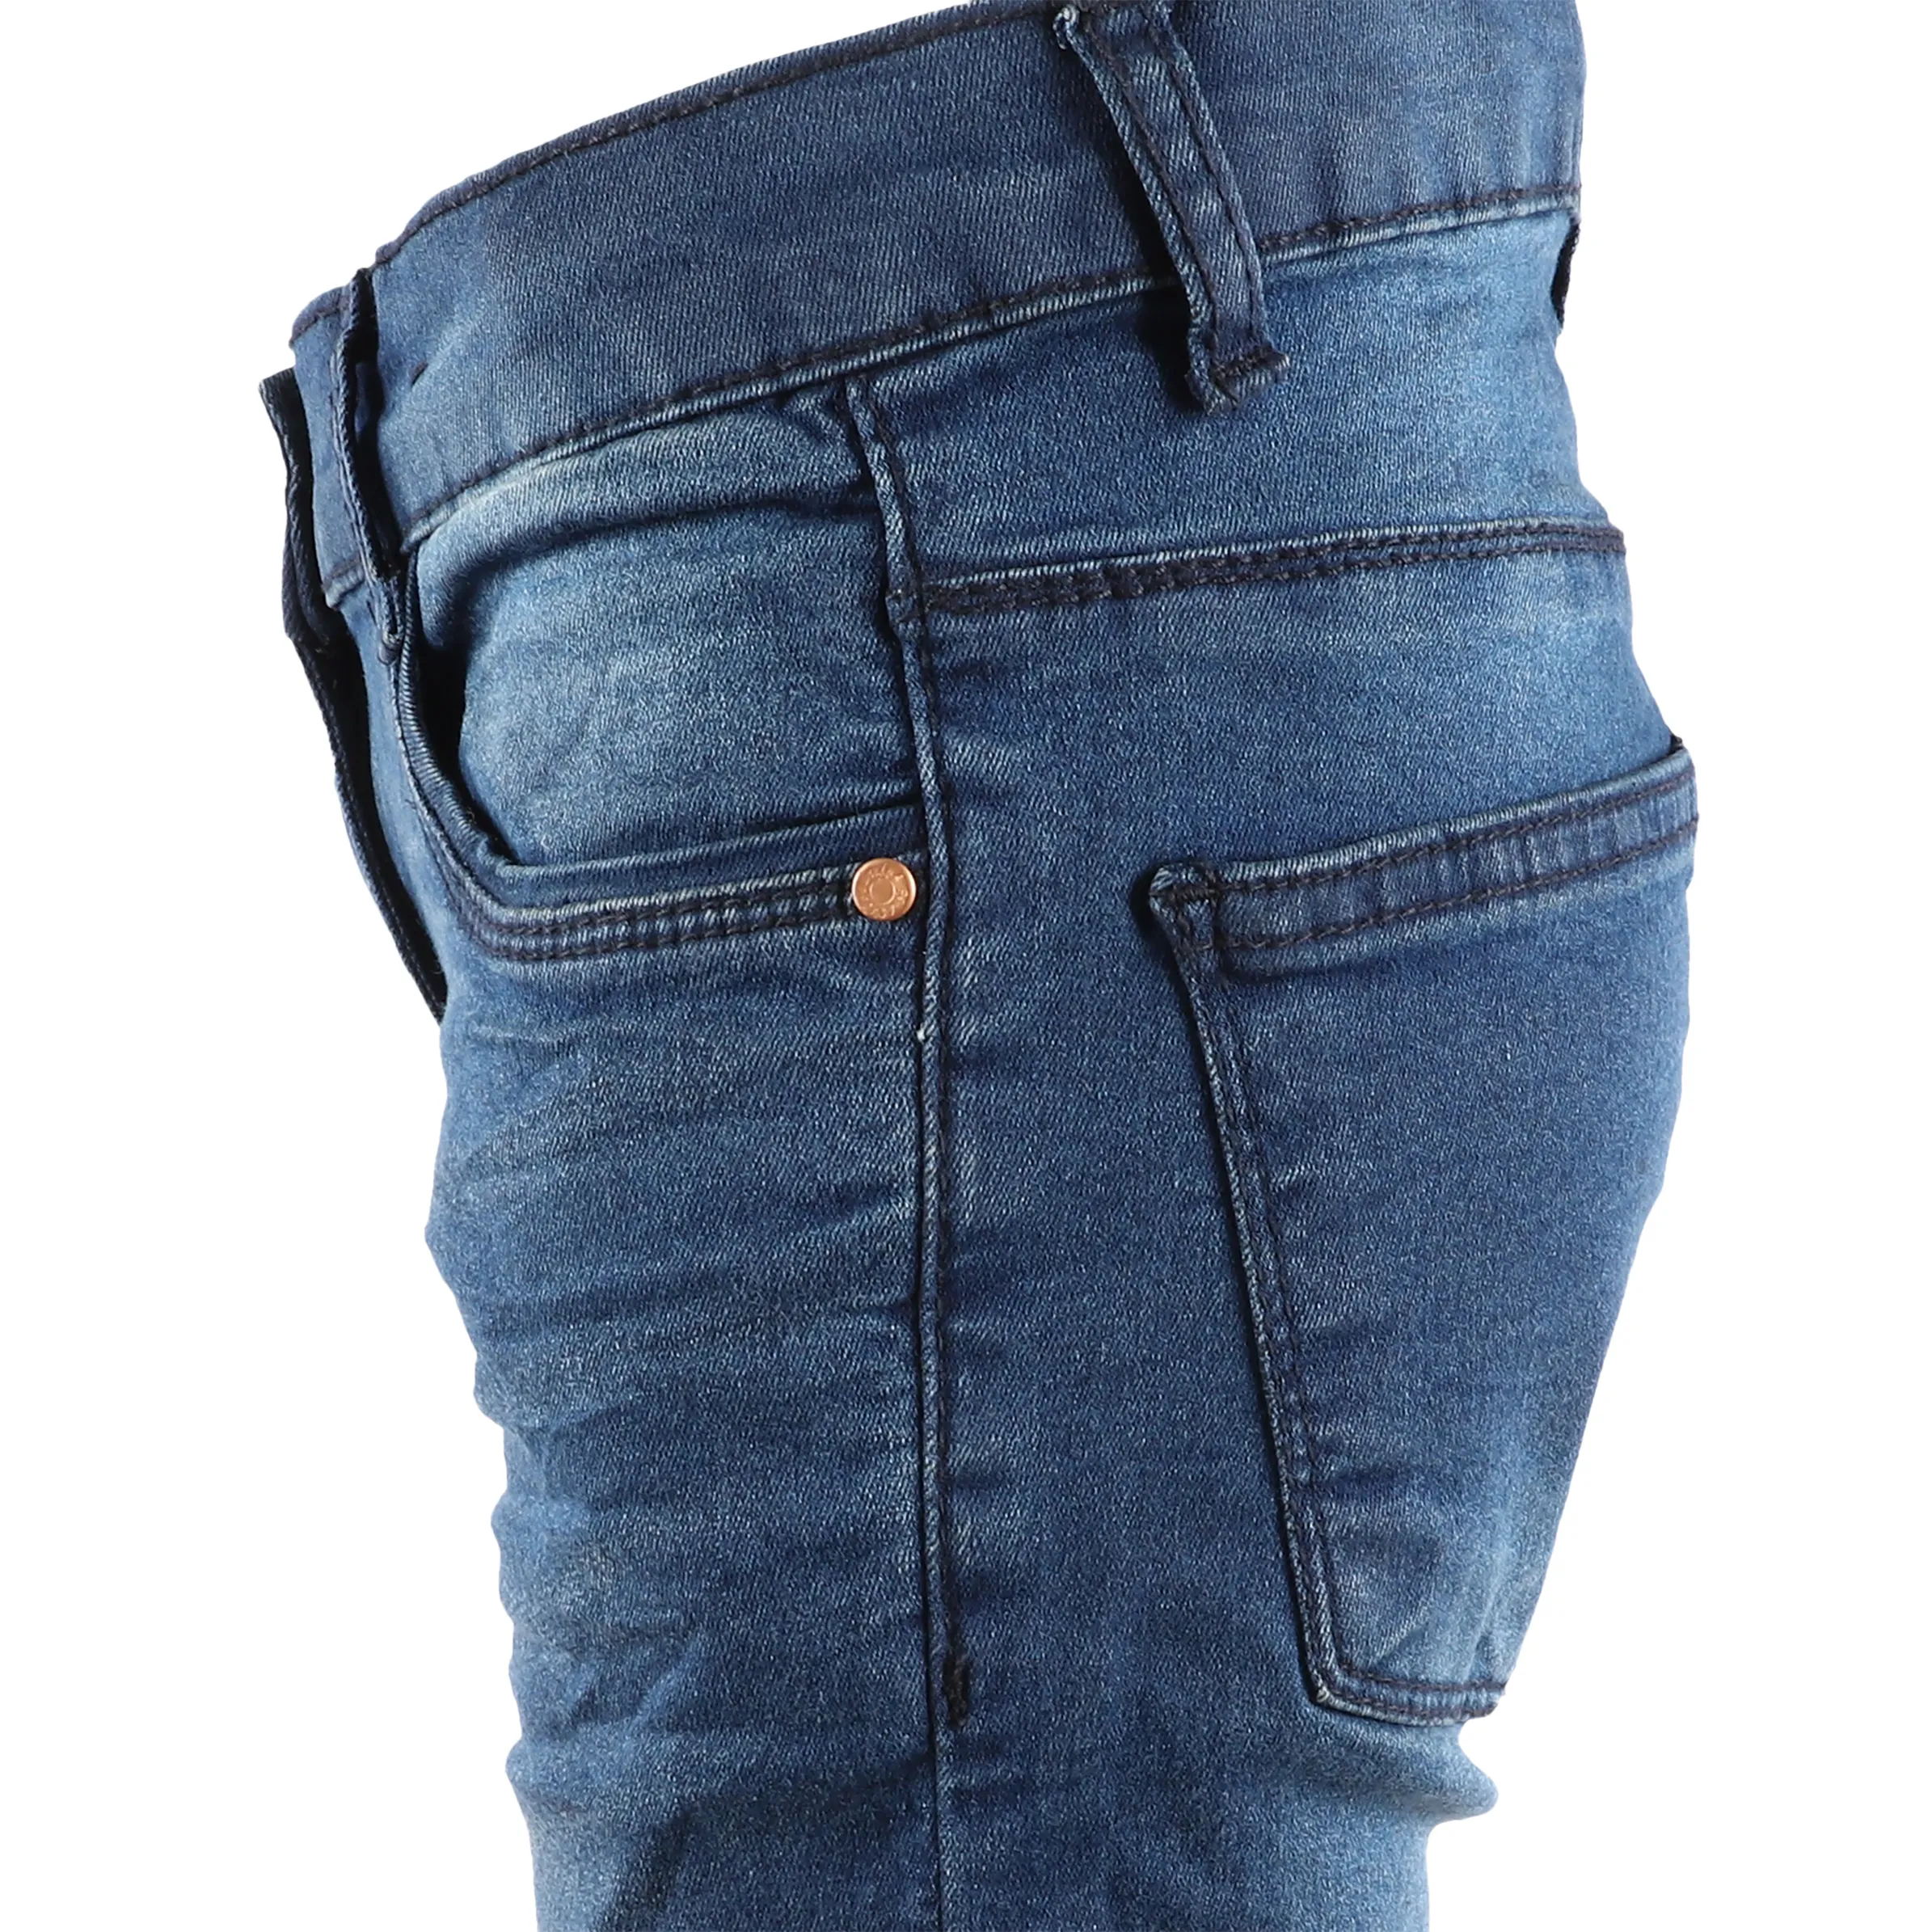 Stop + Go JM Jeans skinny mit kontrastnähten in midblue Blau 890801 MITTELBLAU 3